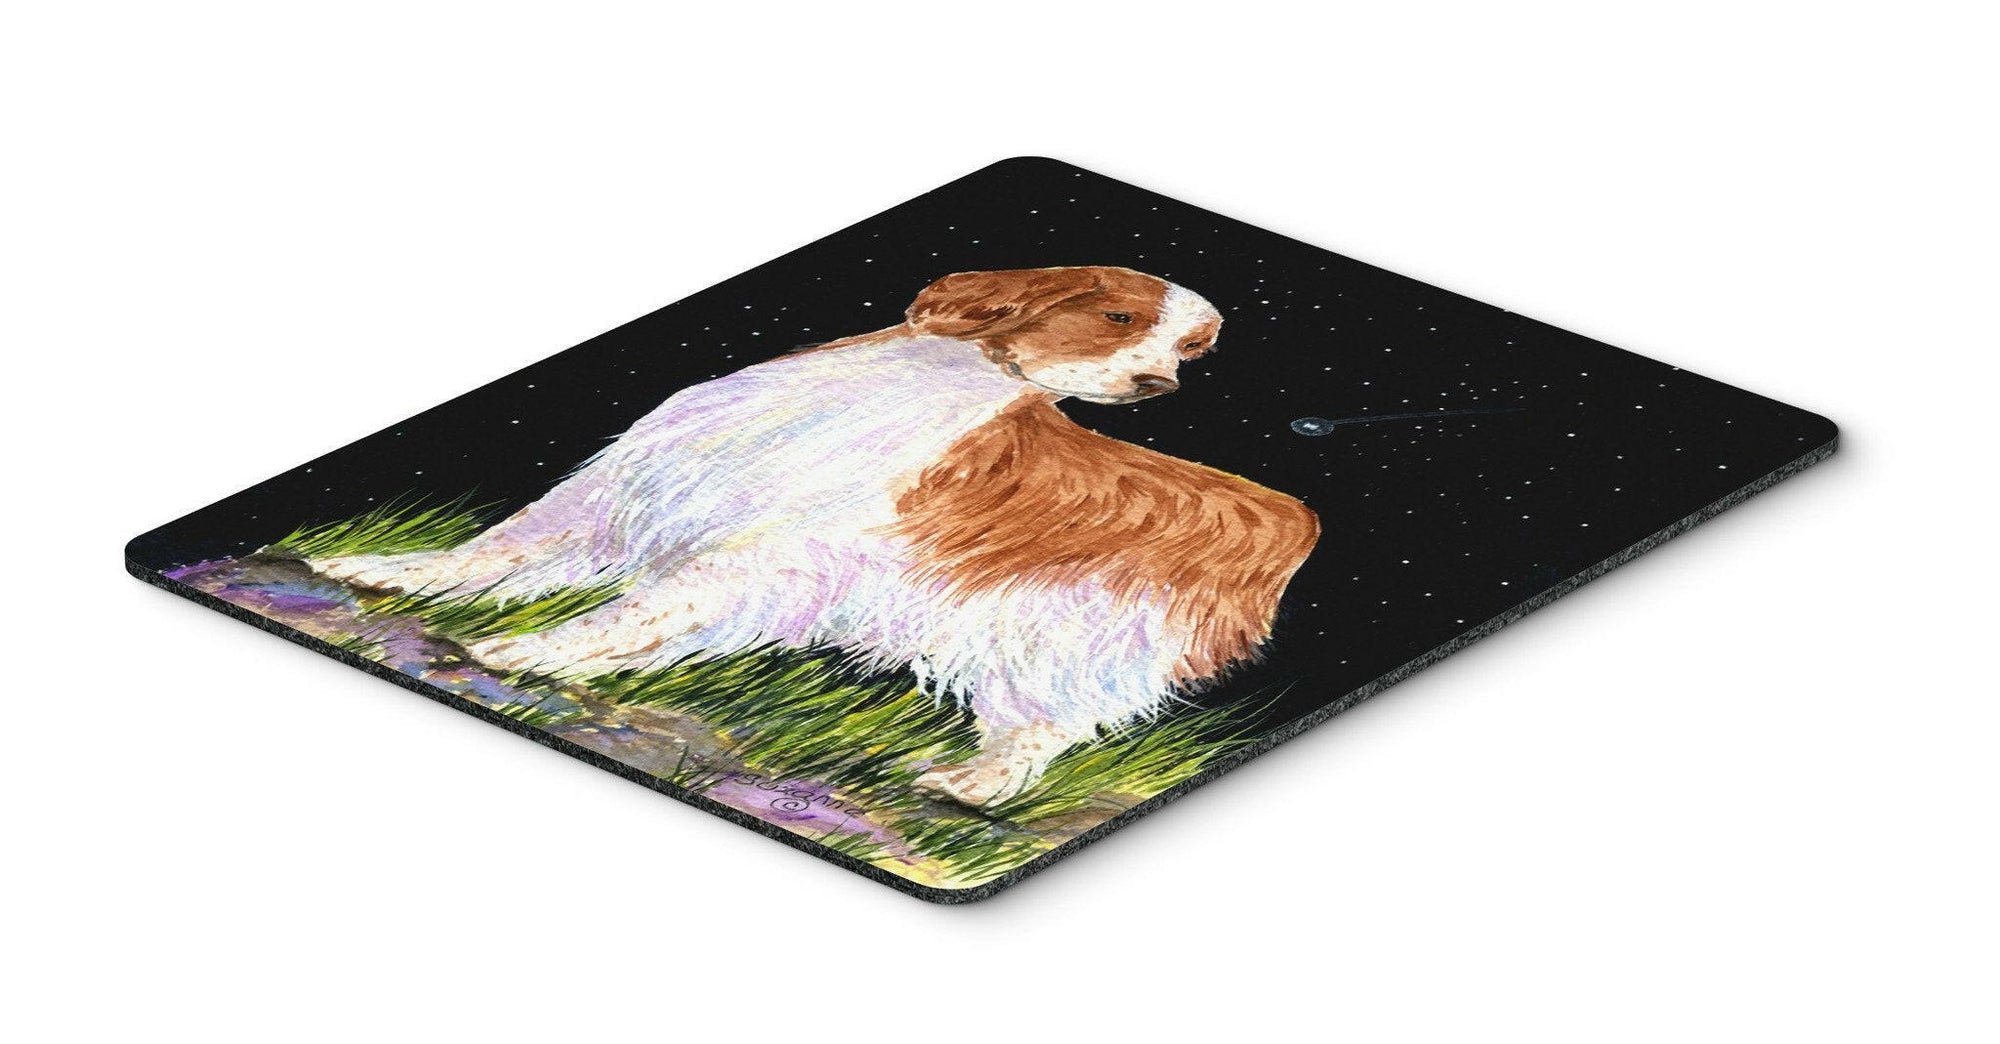 Starry Night Welsh Springer Spaniel Mouse Pad / Hot Pad / Trivet by Caroline's Treasures